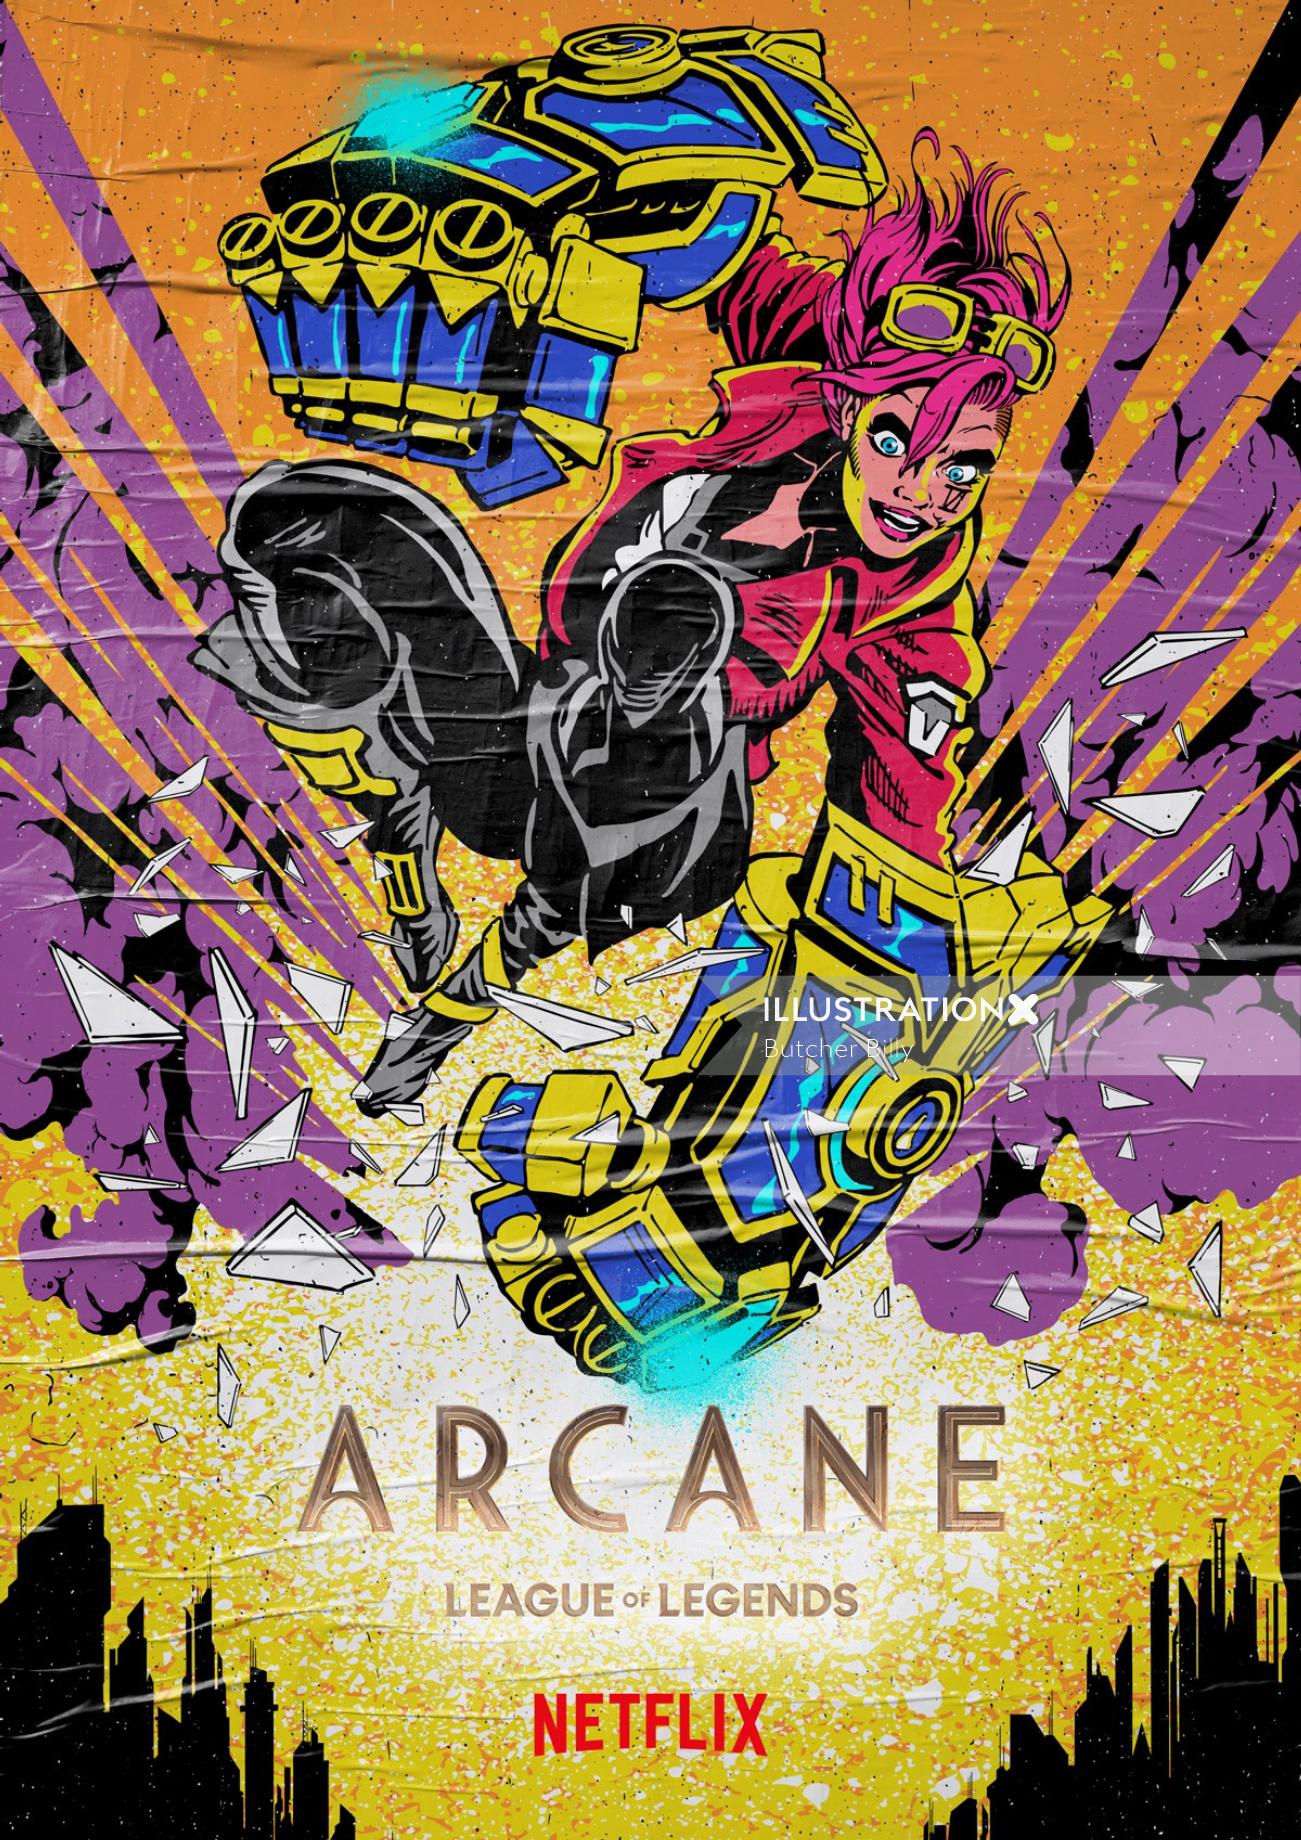 Butcher Billy's Netflix Arcane poster design is stunning